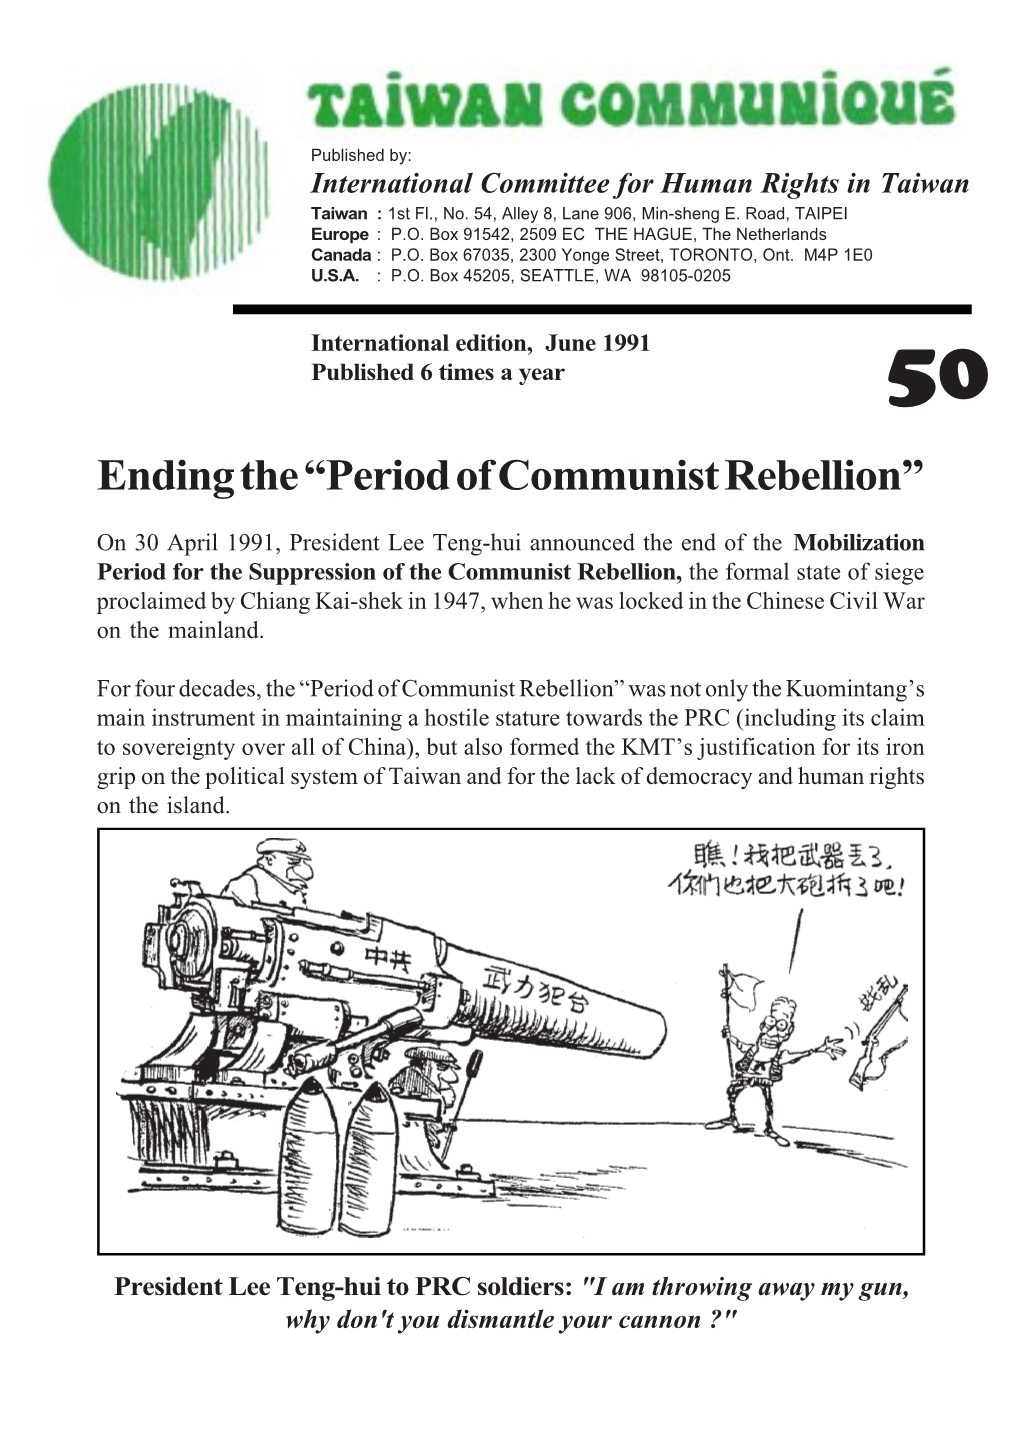 Ending the “Period of Communist Rebellion”